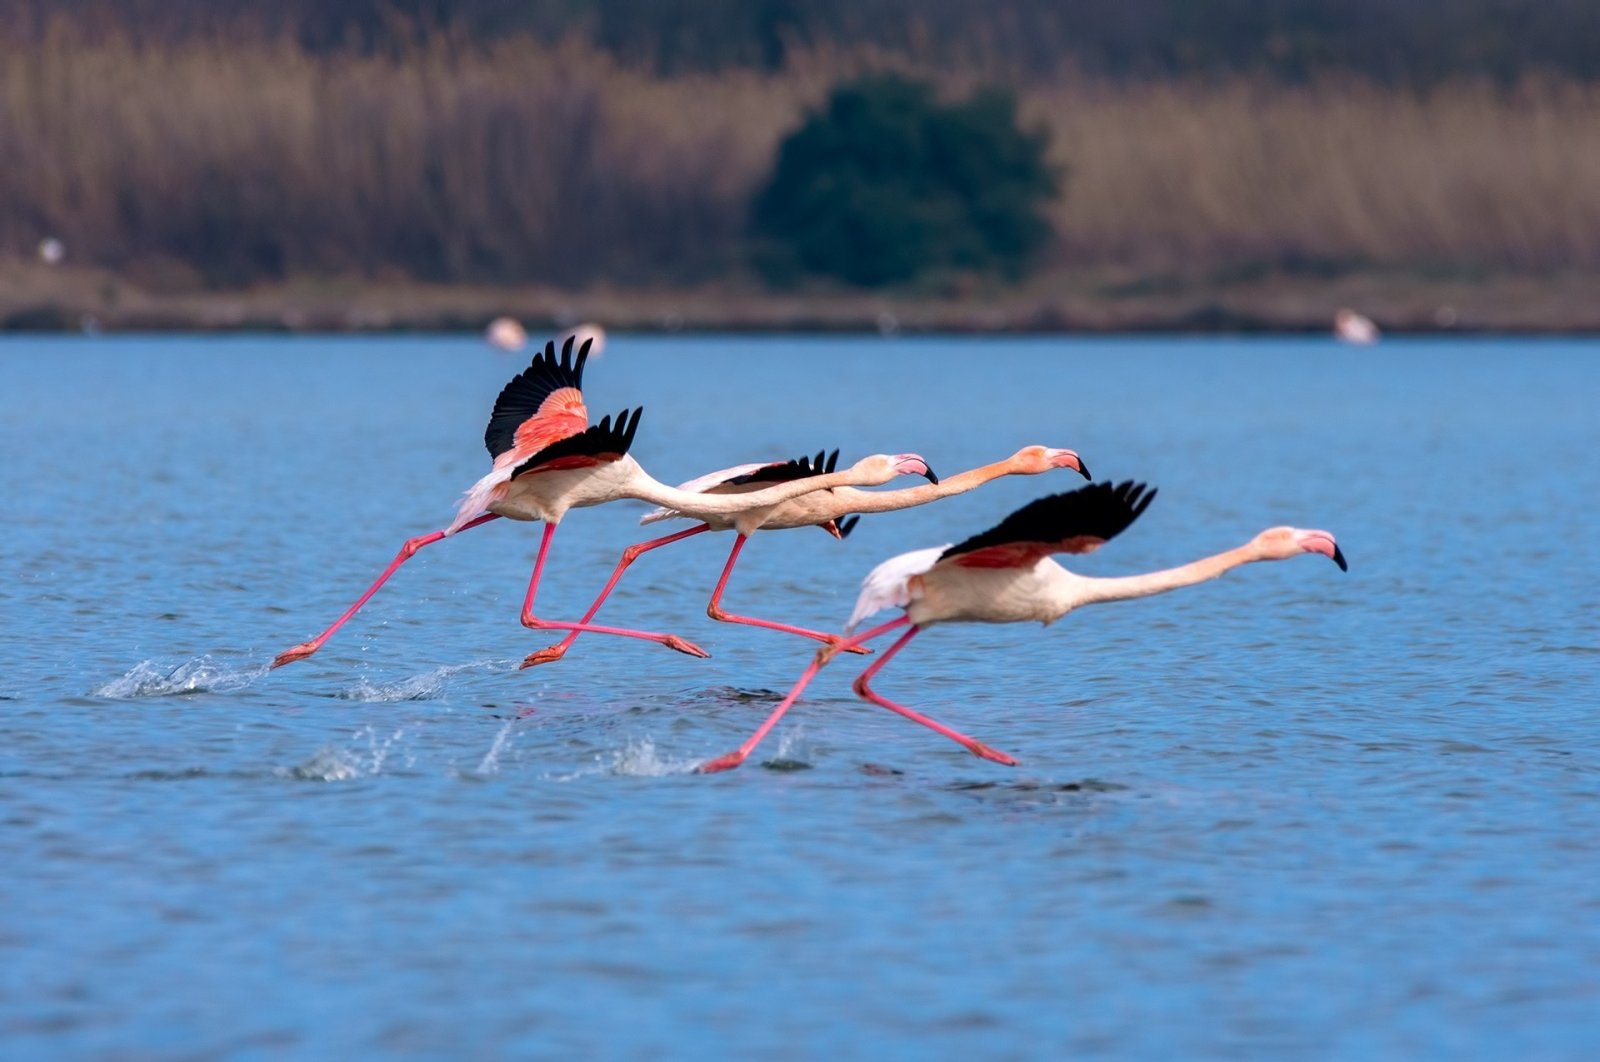 Laguna Turki memberikan perlindungan bagi flamingo yang melarikan diri dari kekeringan